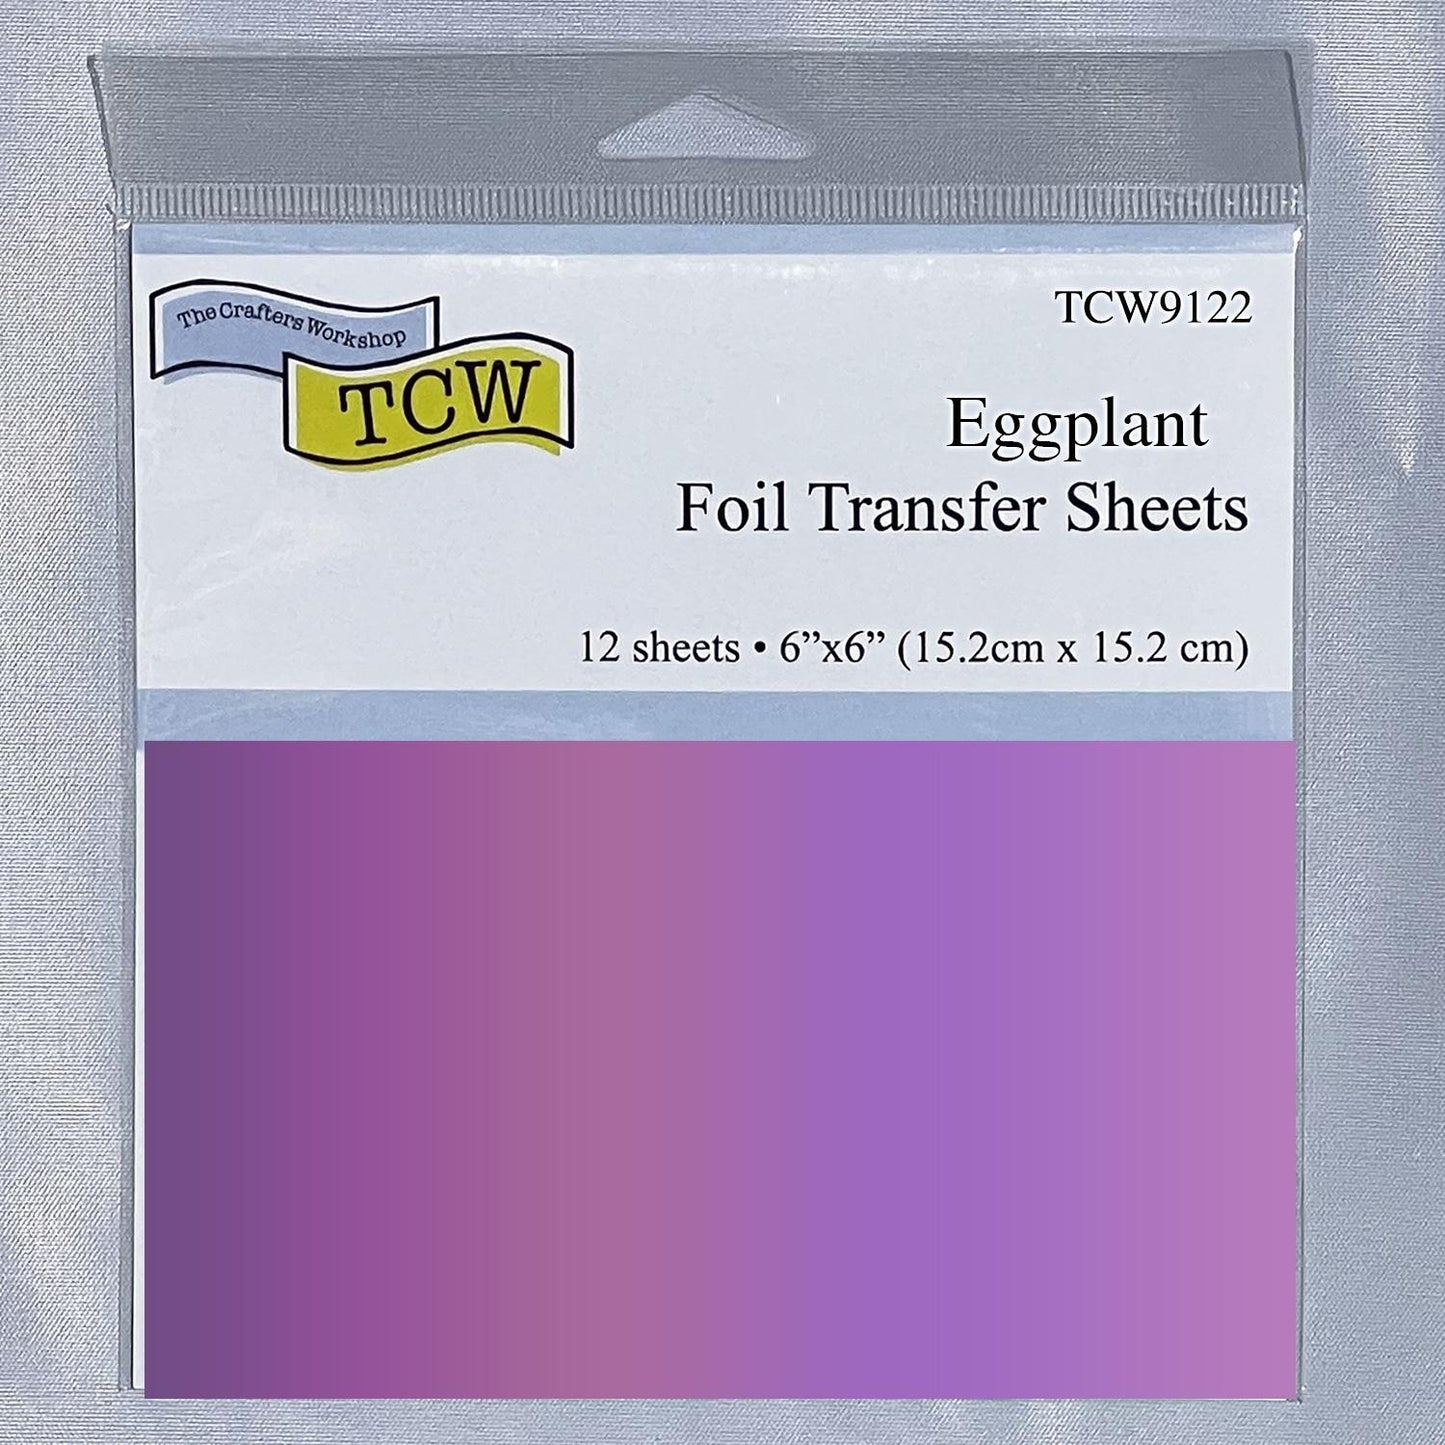 TCW9100 Foil Transfer Sheets 6x6 - Eggplant